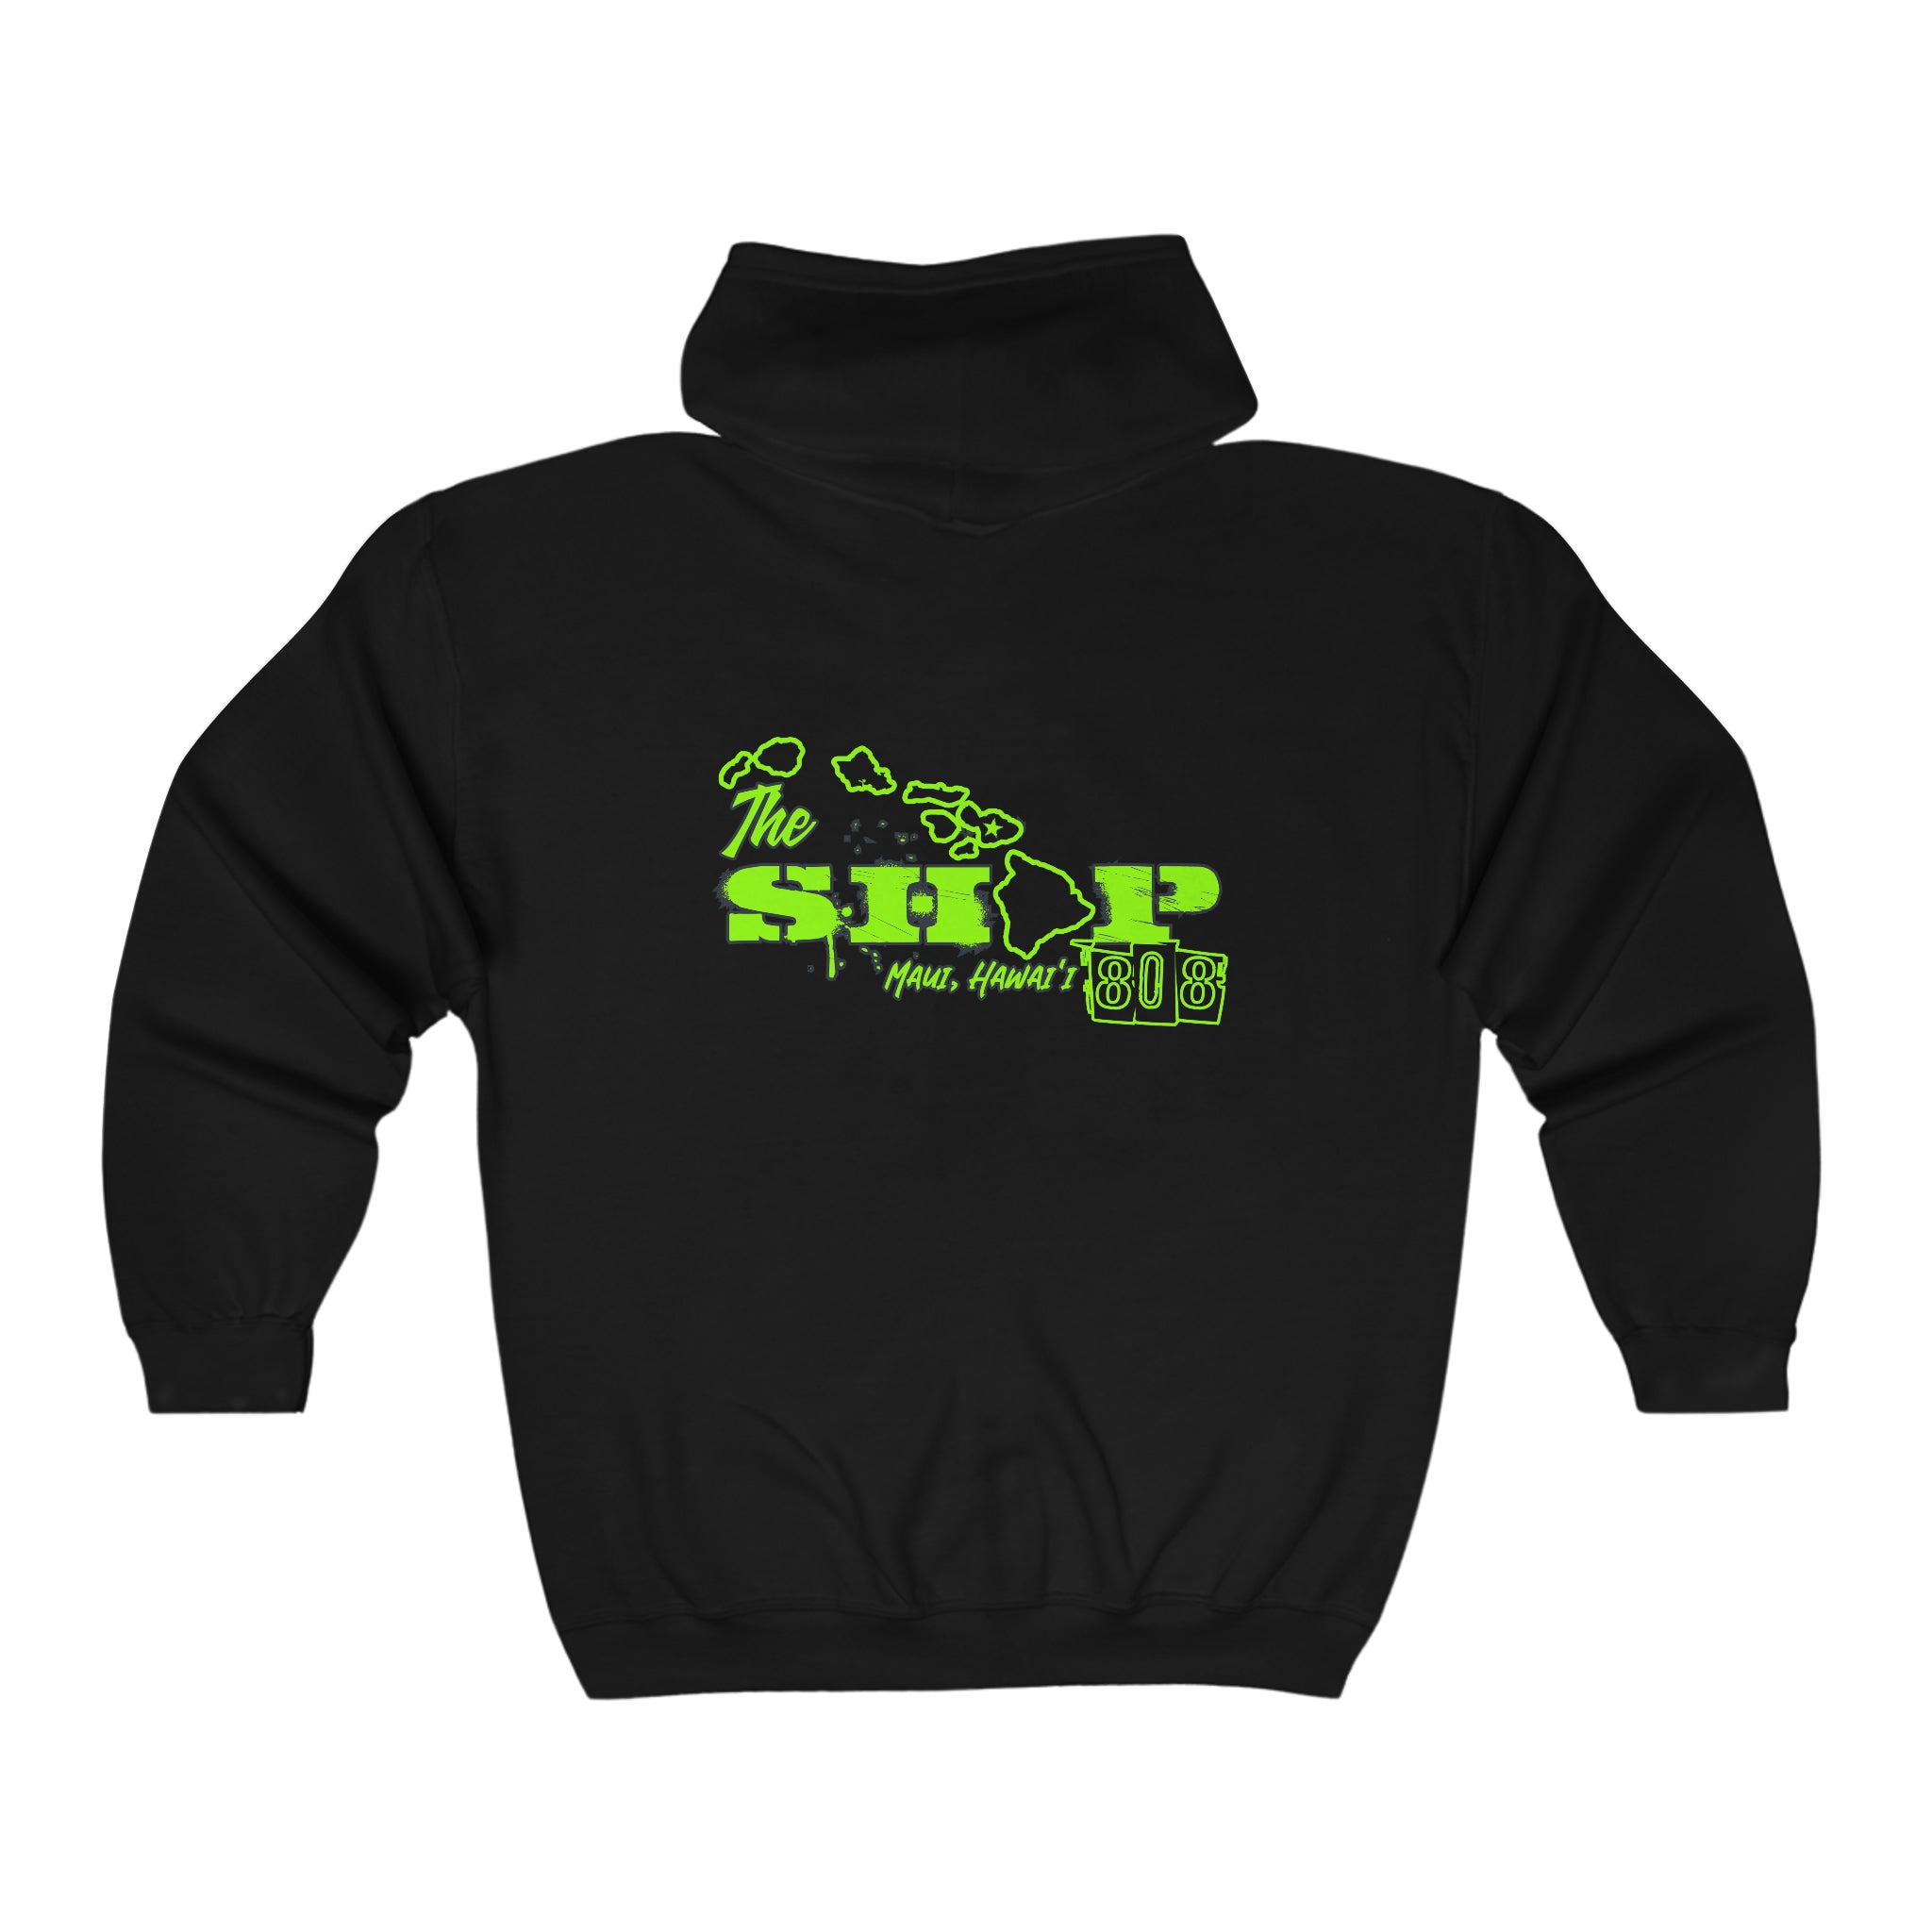 The Shop 808 Full Zip Hooded Sweatshirt